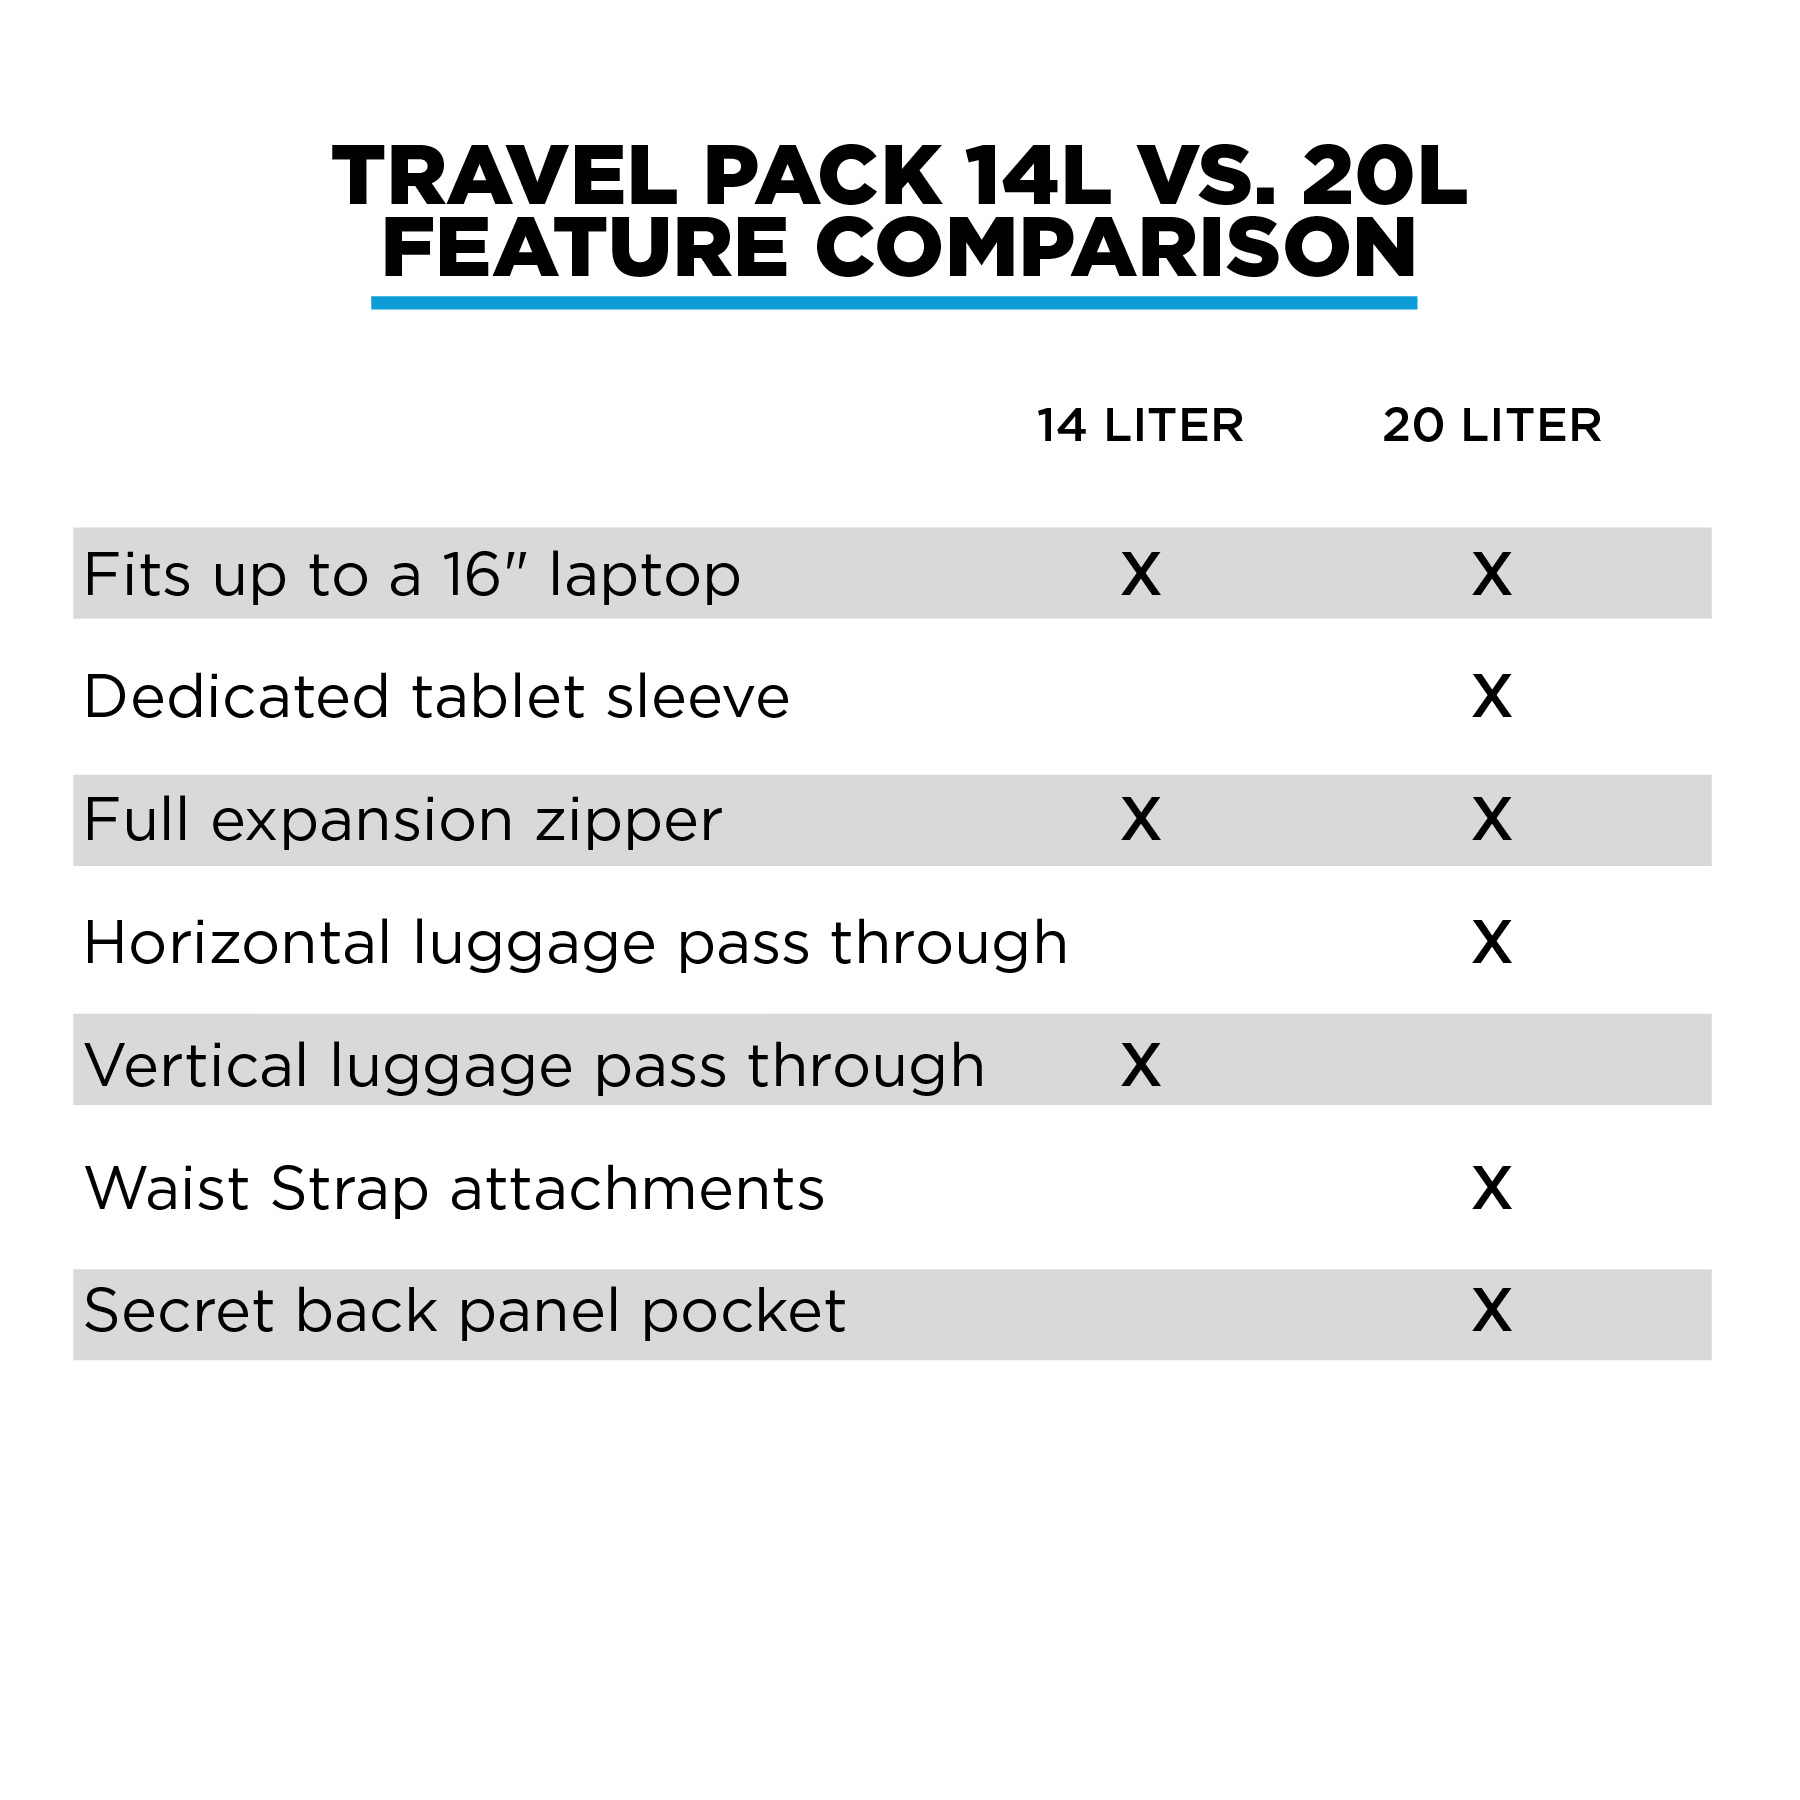 14L Travel Pack